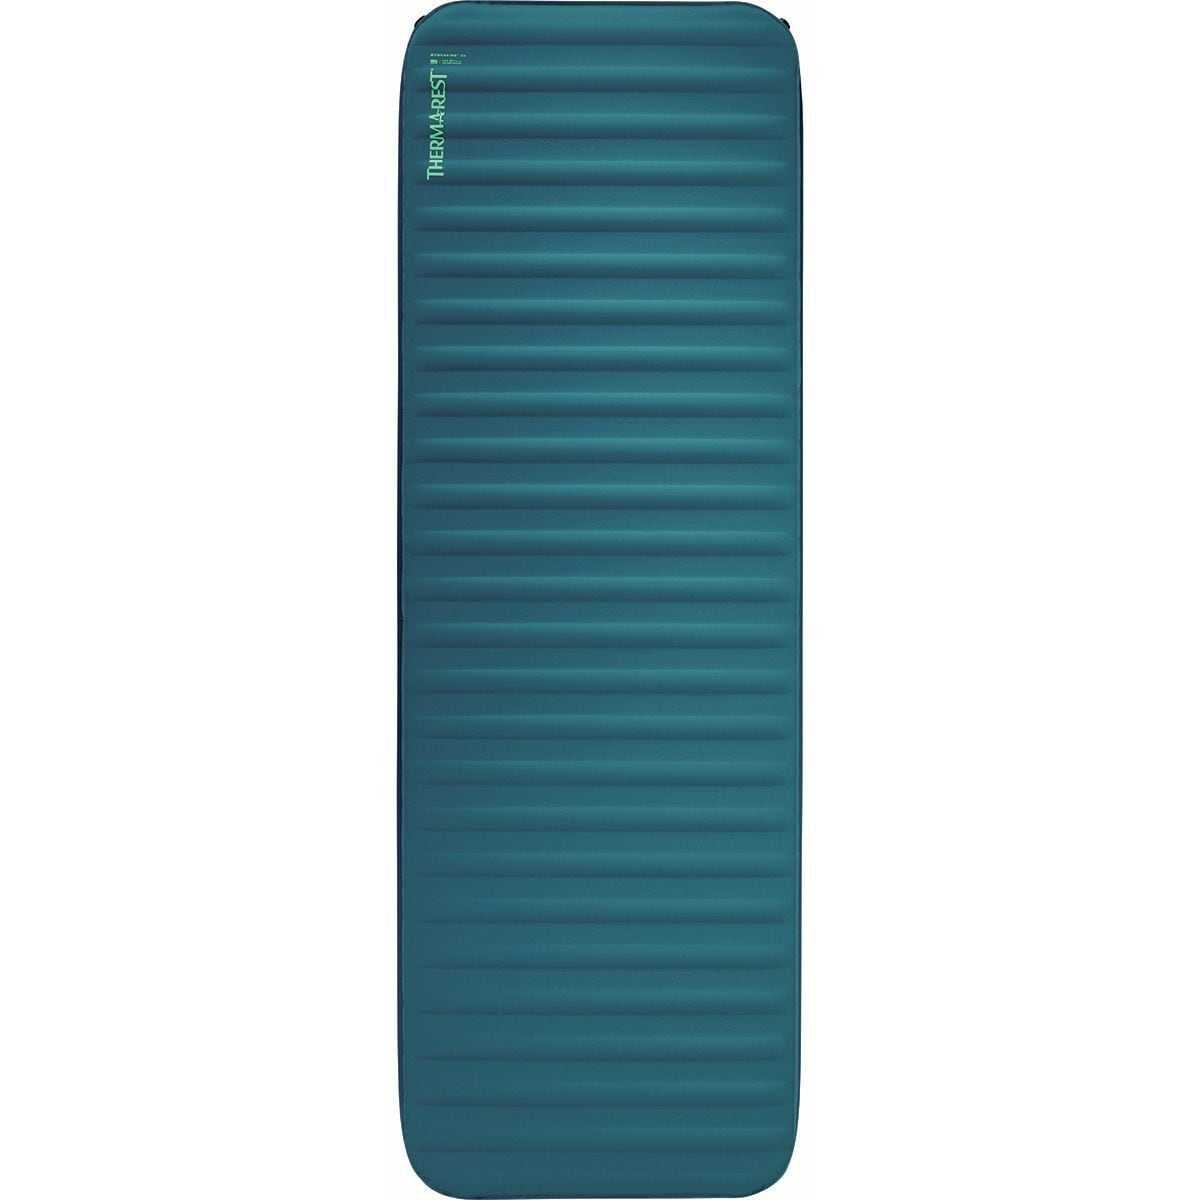 Therm-a-Rest MondoKing 3D Sleeping Pad Poseidon Blue, Large